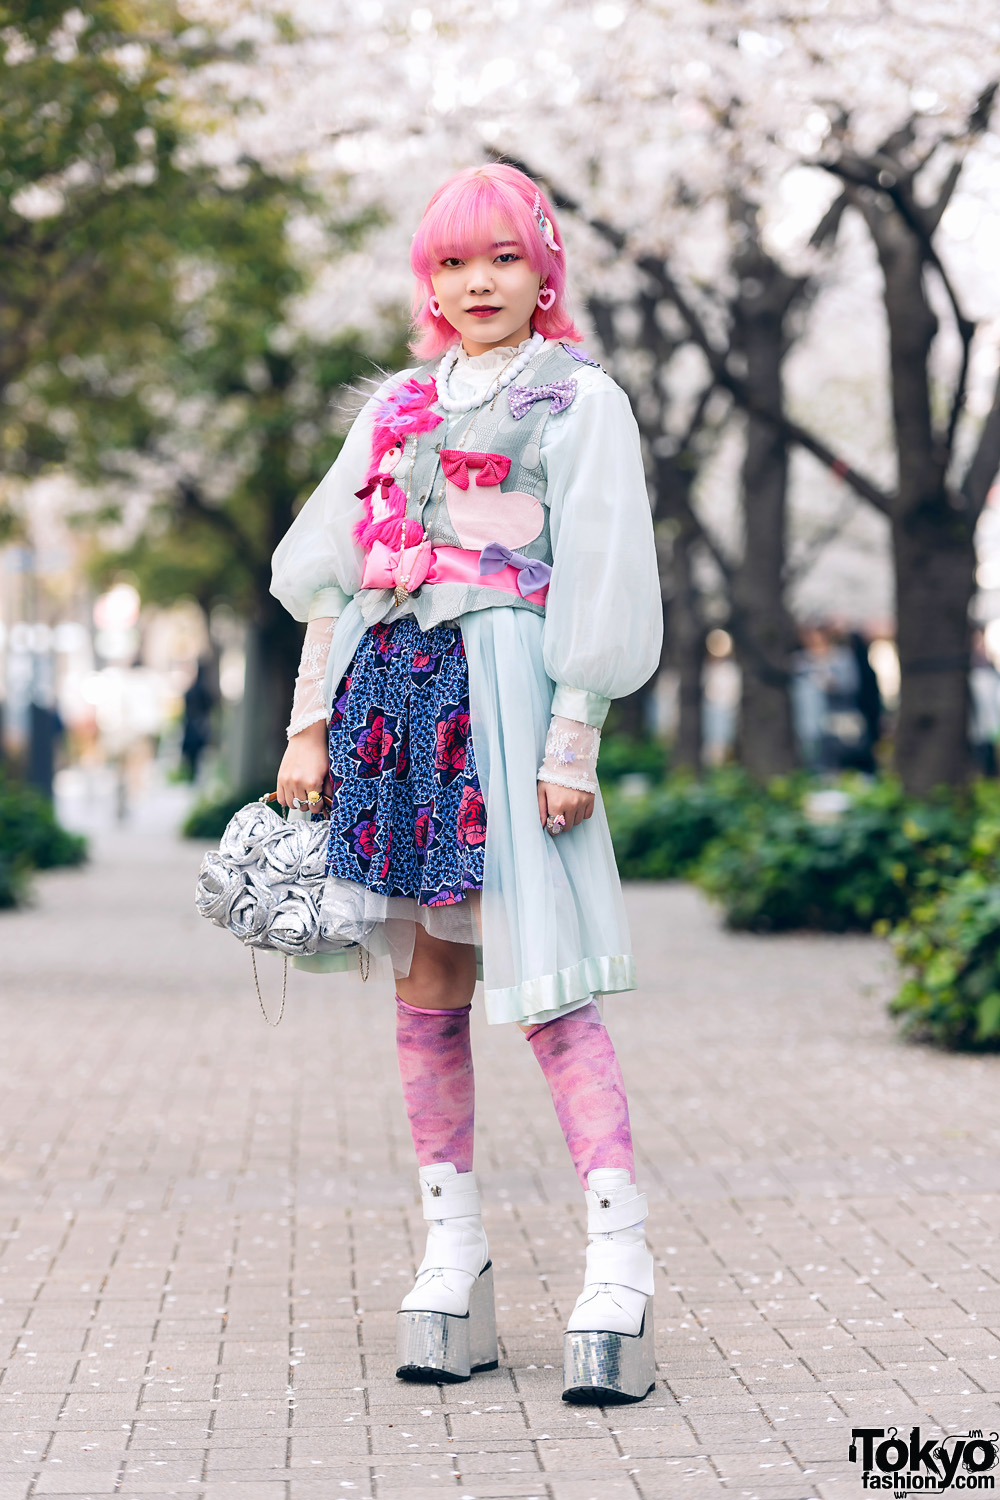 Pink & Blue Street Style in Tokyo w/ Pink Hair, Kiki2 Layered Tops, Floral Skirt, Vintage Accessories, Sequin Flower Handbag  & Metallic Platforms